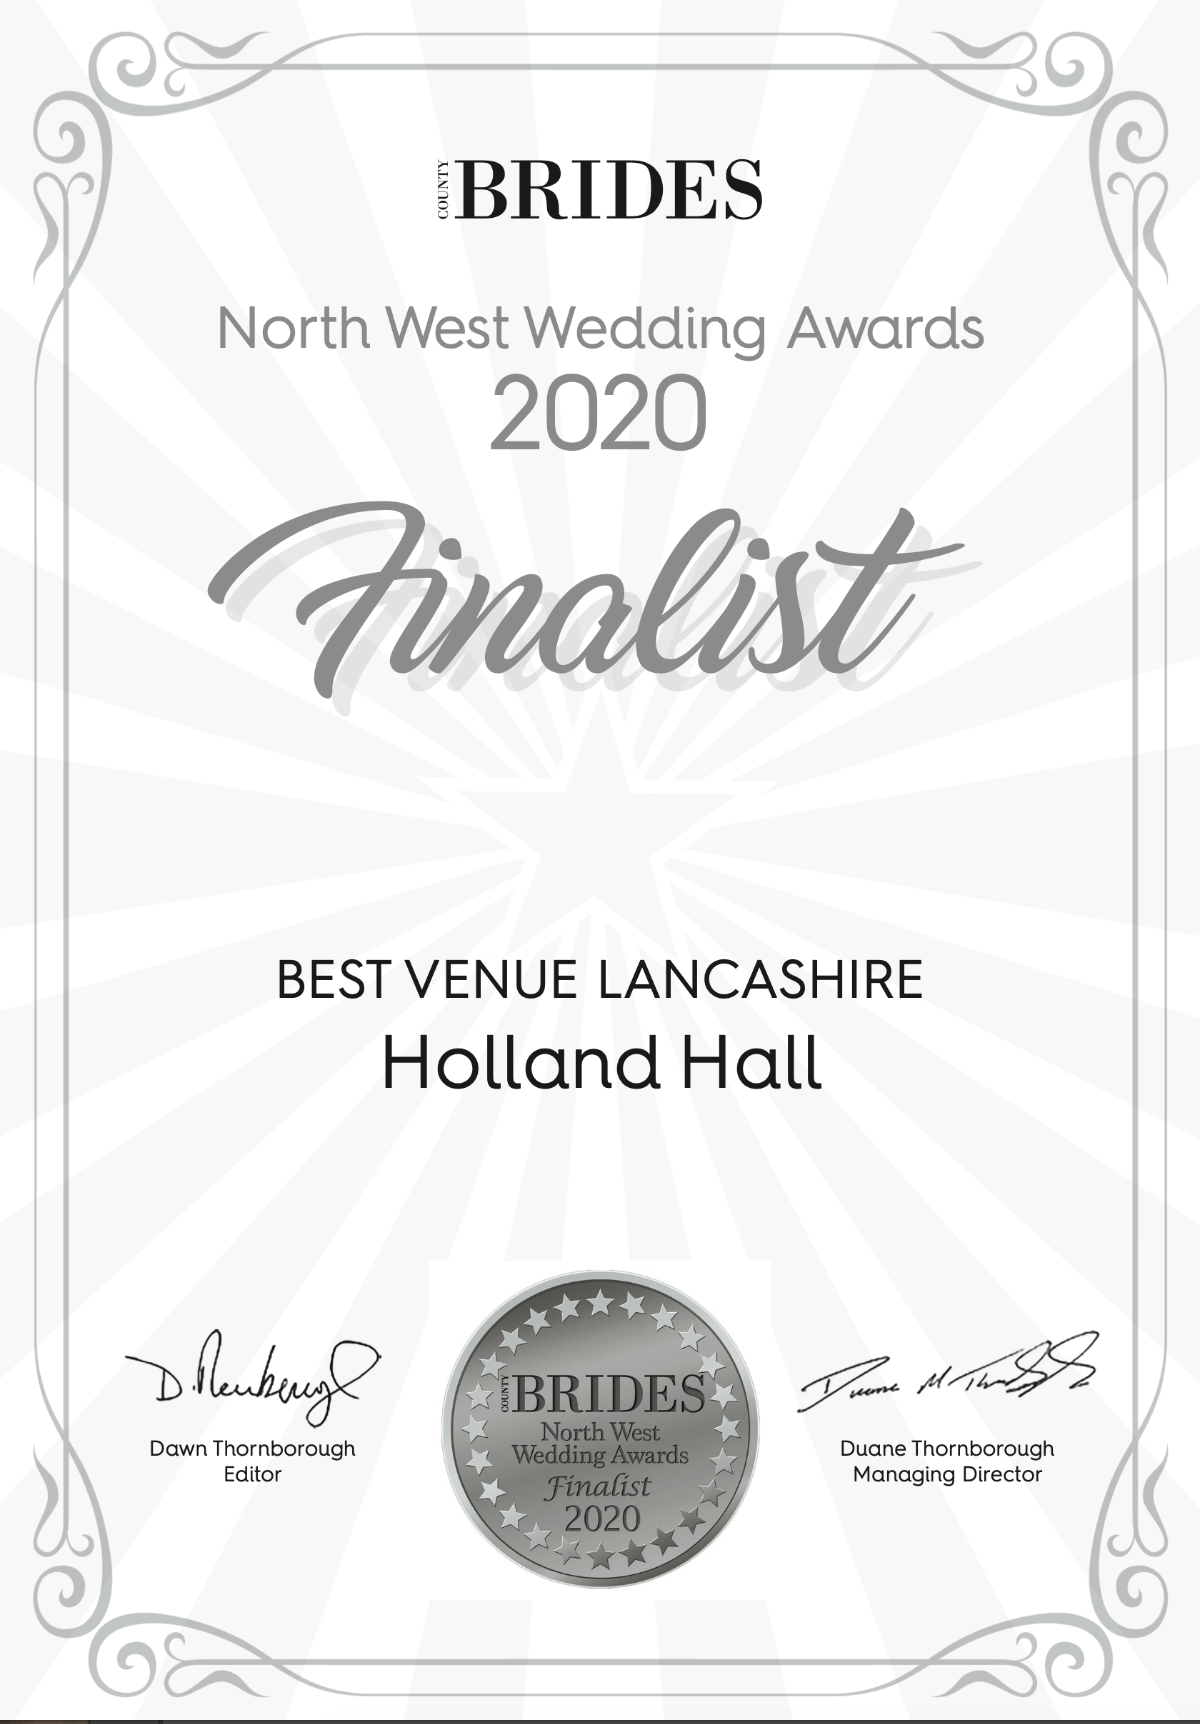 North West Weddings Award 2020 - Finalists